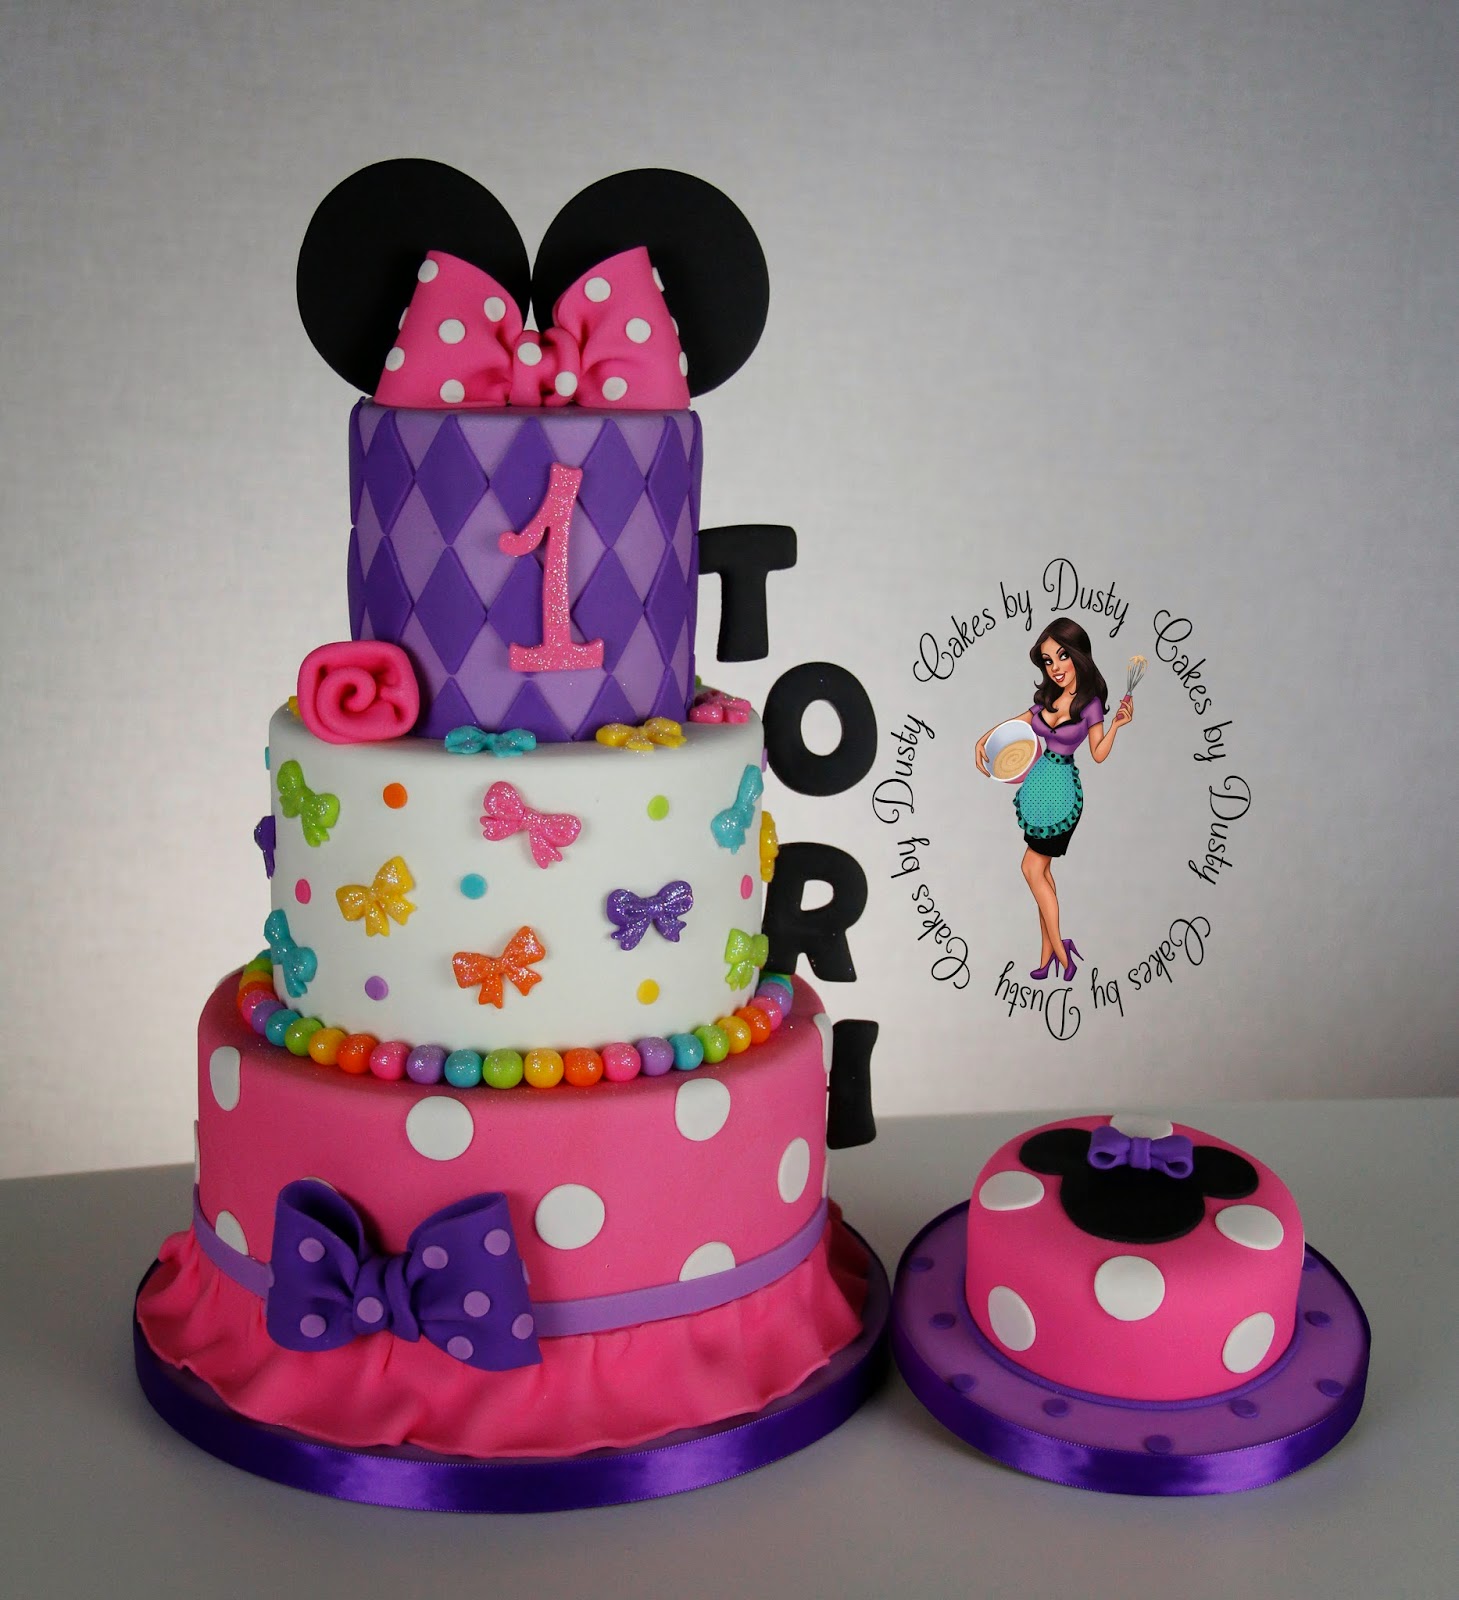 Cakes by Dusty: Tori's 1st Birthday Cake1459 x 1600